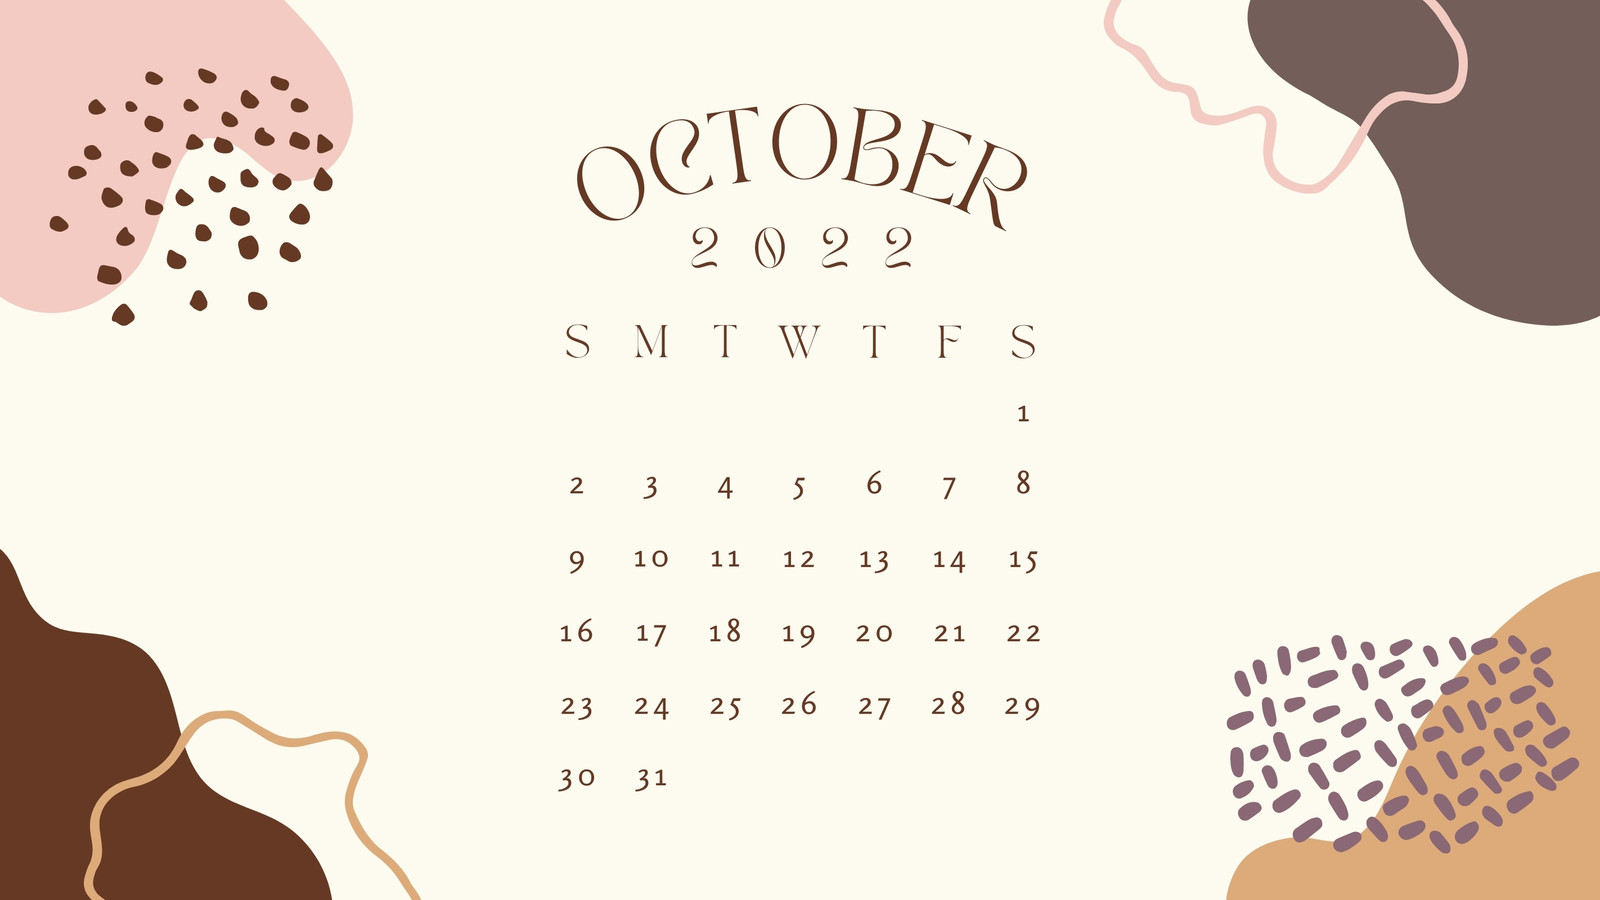 October 2022 Calendar Wallpaper Free Customizable Geometric Desktop Wallpaper Templates | Canva